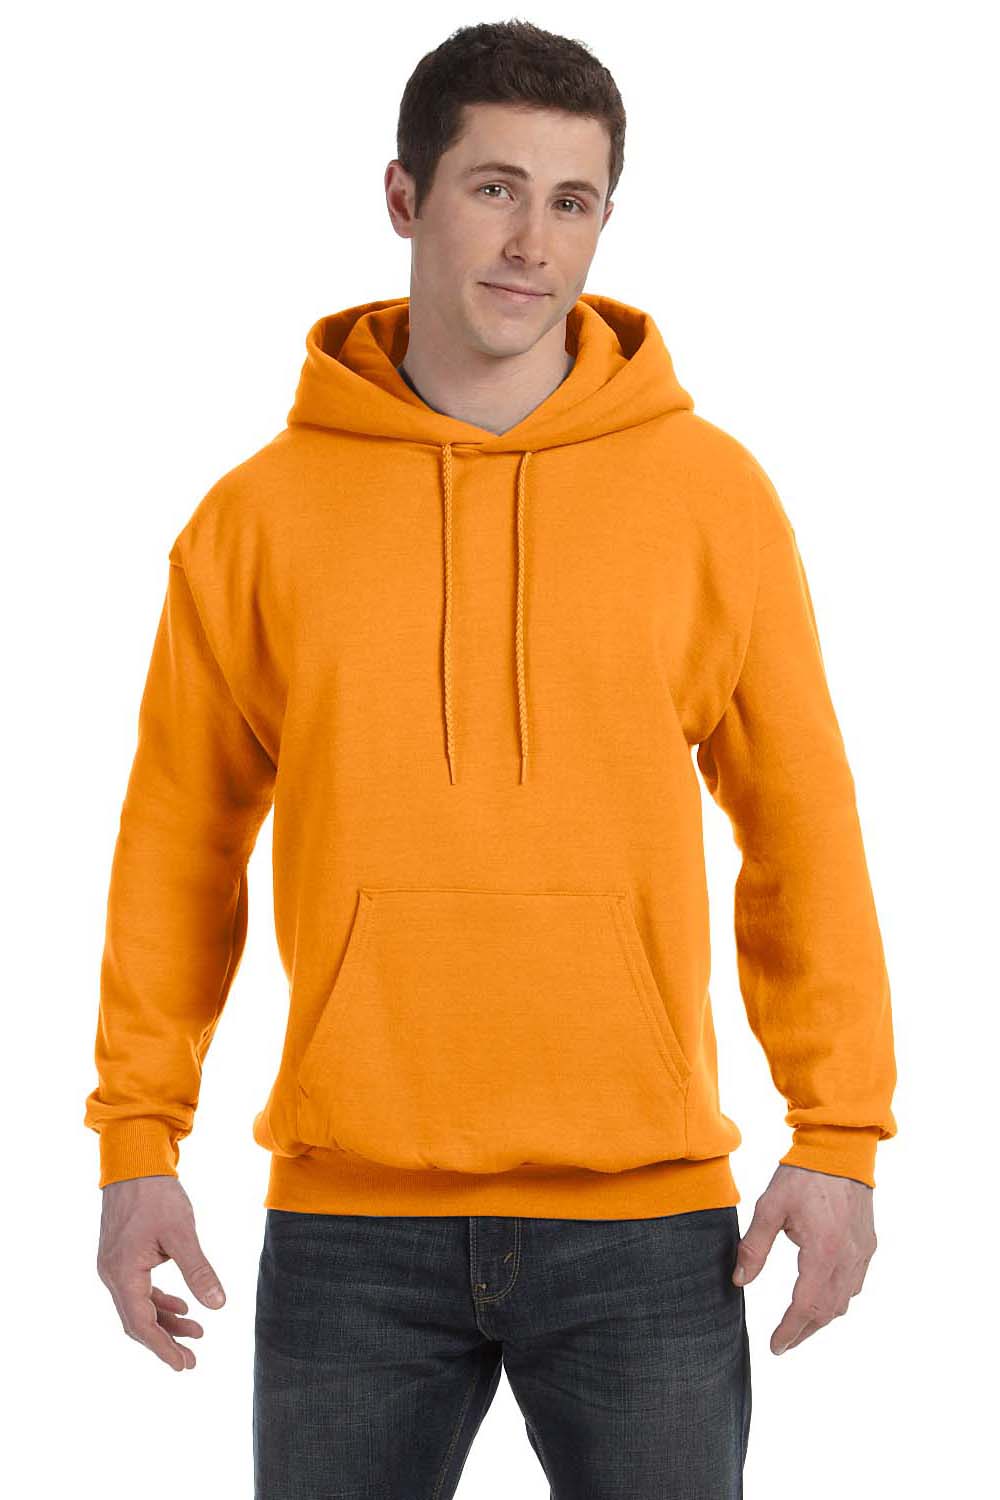 Hanes P170 Mens EcoSmart Print Pro XP Hooded Sweatshirt Hoodie Safety Orange Front